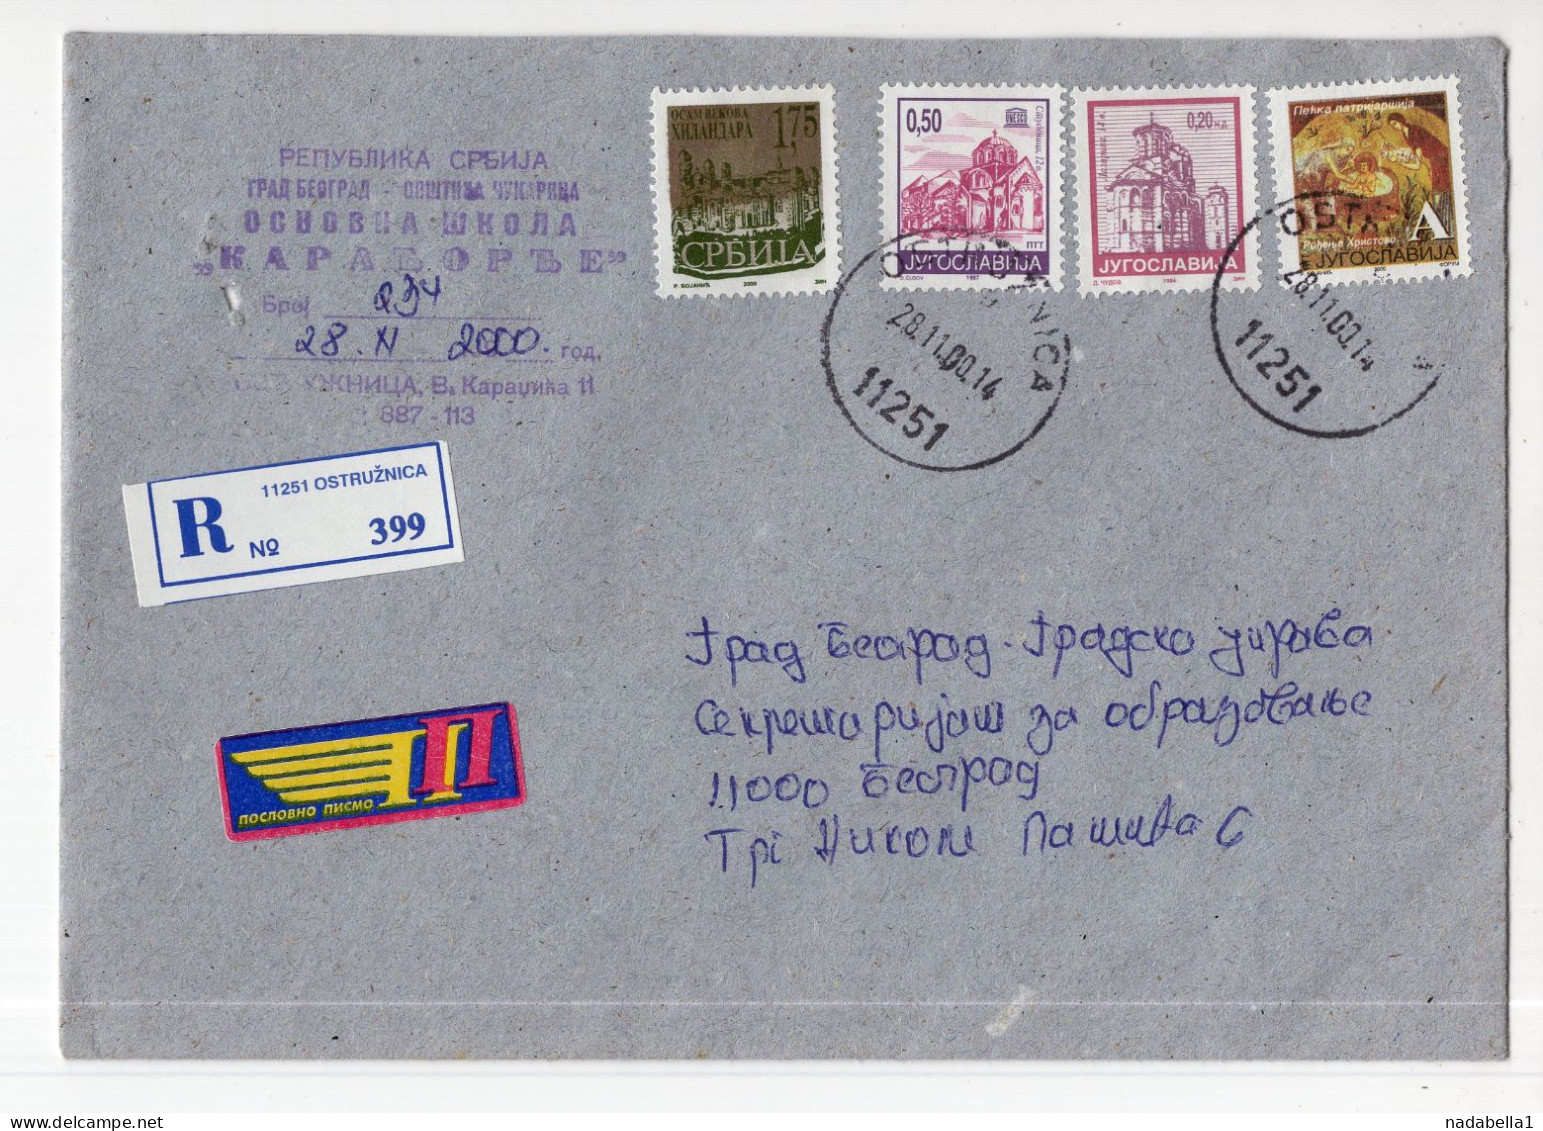 2000. YUGOSLAVIA,SERBIA,OSTRUZNICA,COVER,4 SERBIAN MONASTERY STAMPS - Covers & Documents